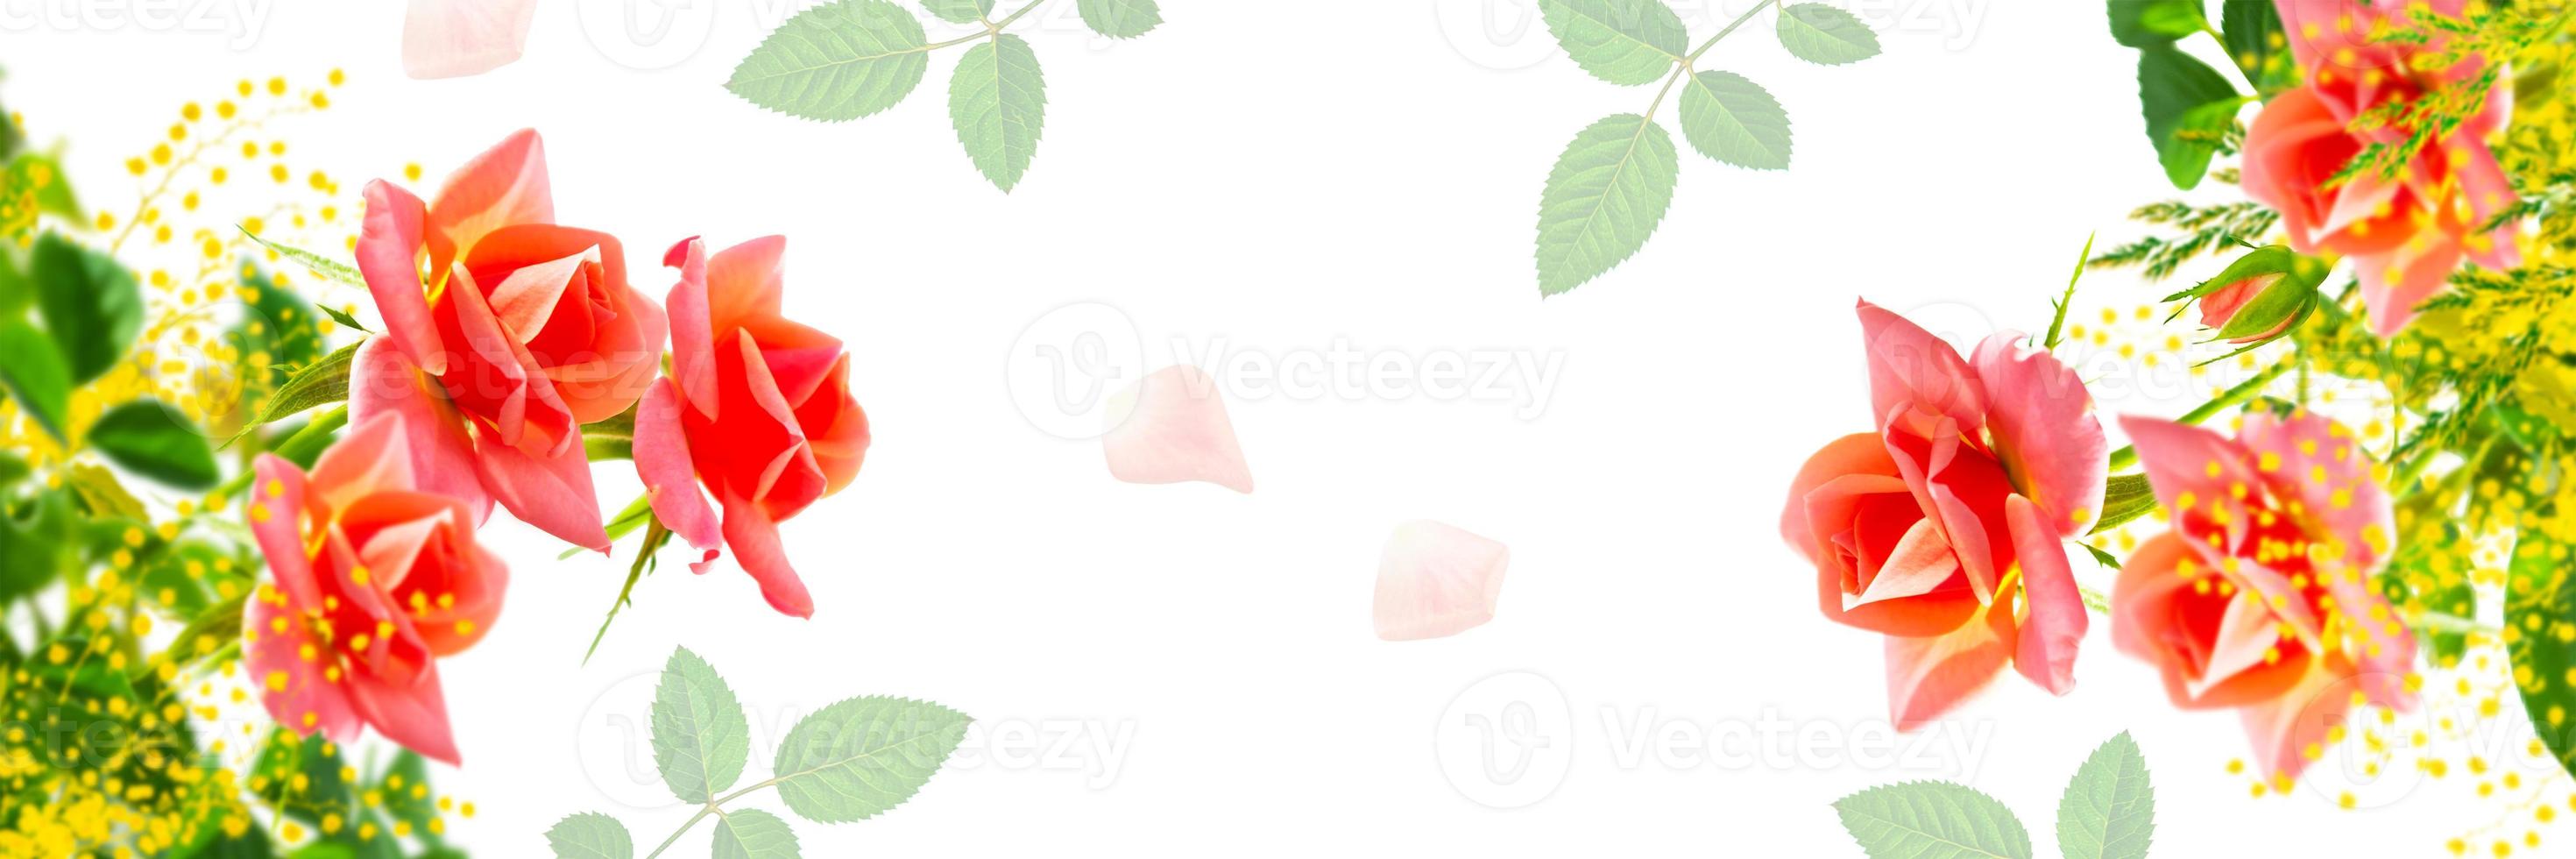 acacia. Flower bud roses on a white background photo